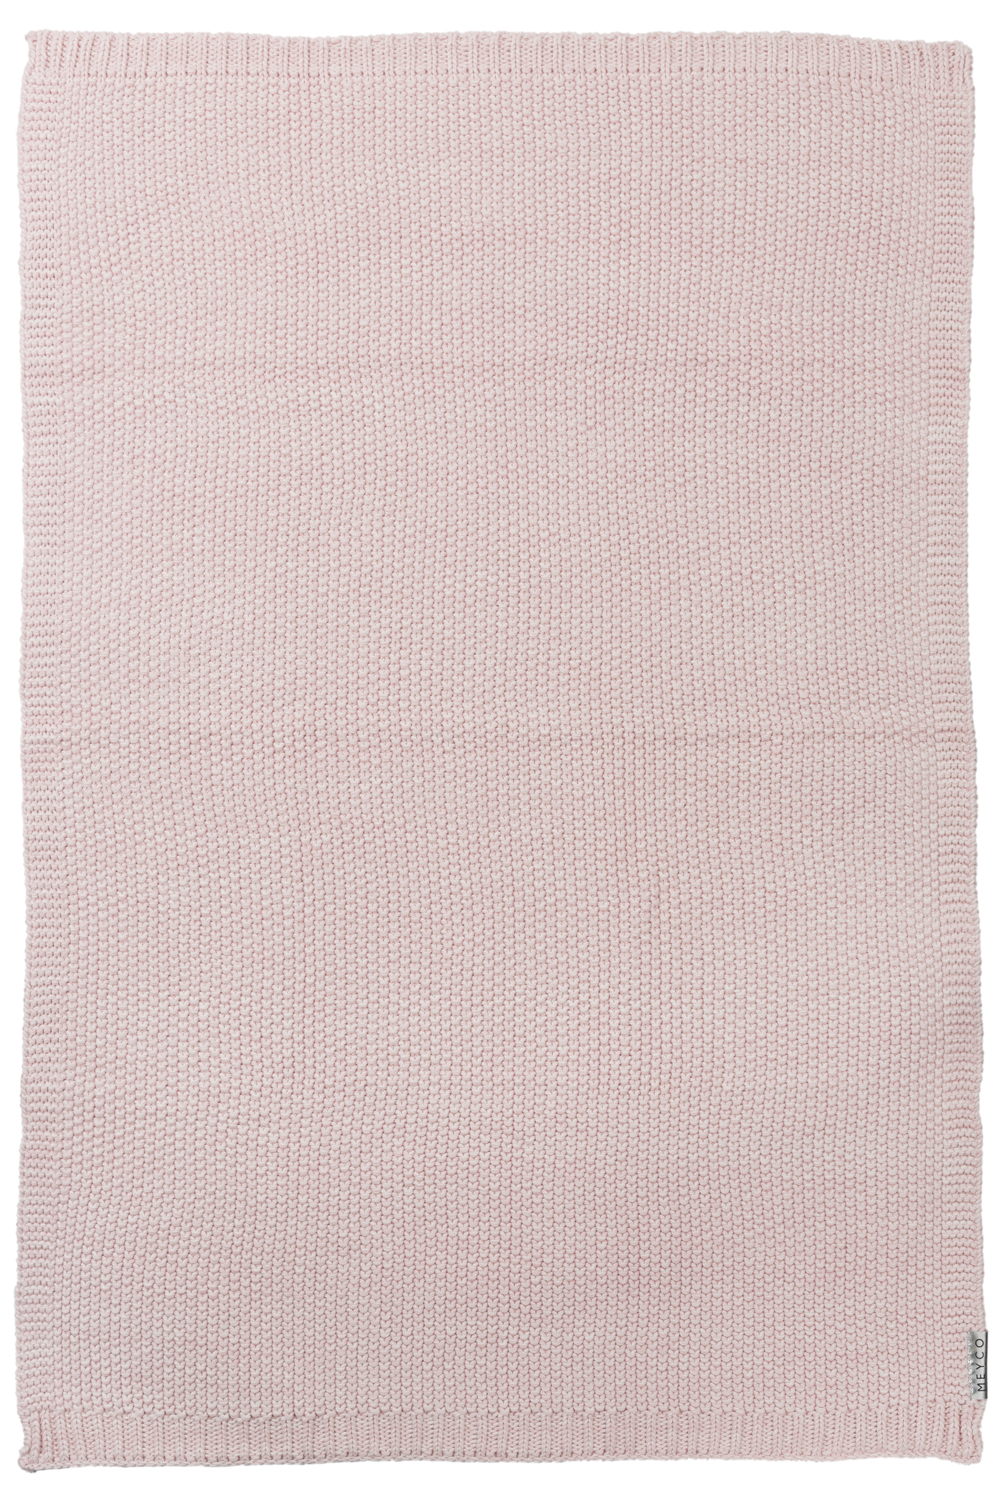 Ledikant deken Relief Mixed - pink - 100x150cm